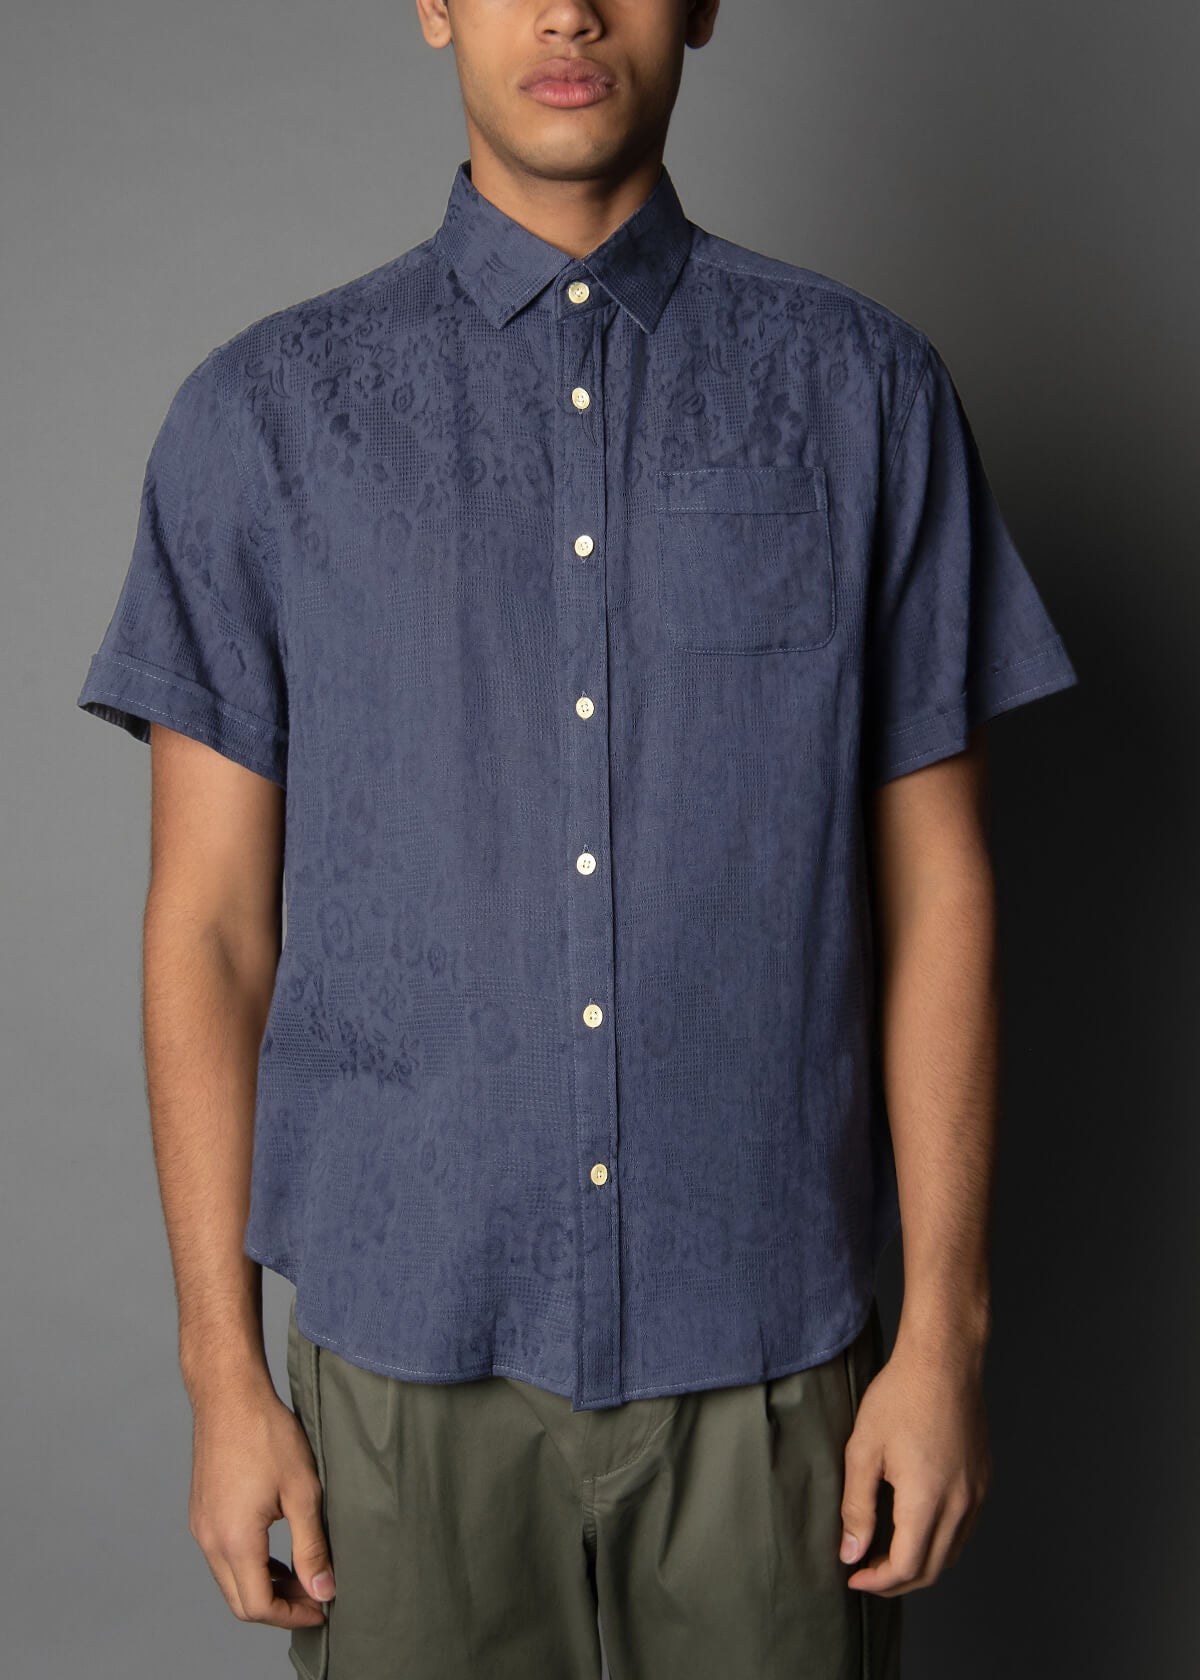 woven jacquard fabric navy short sleeve mens shirt